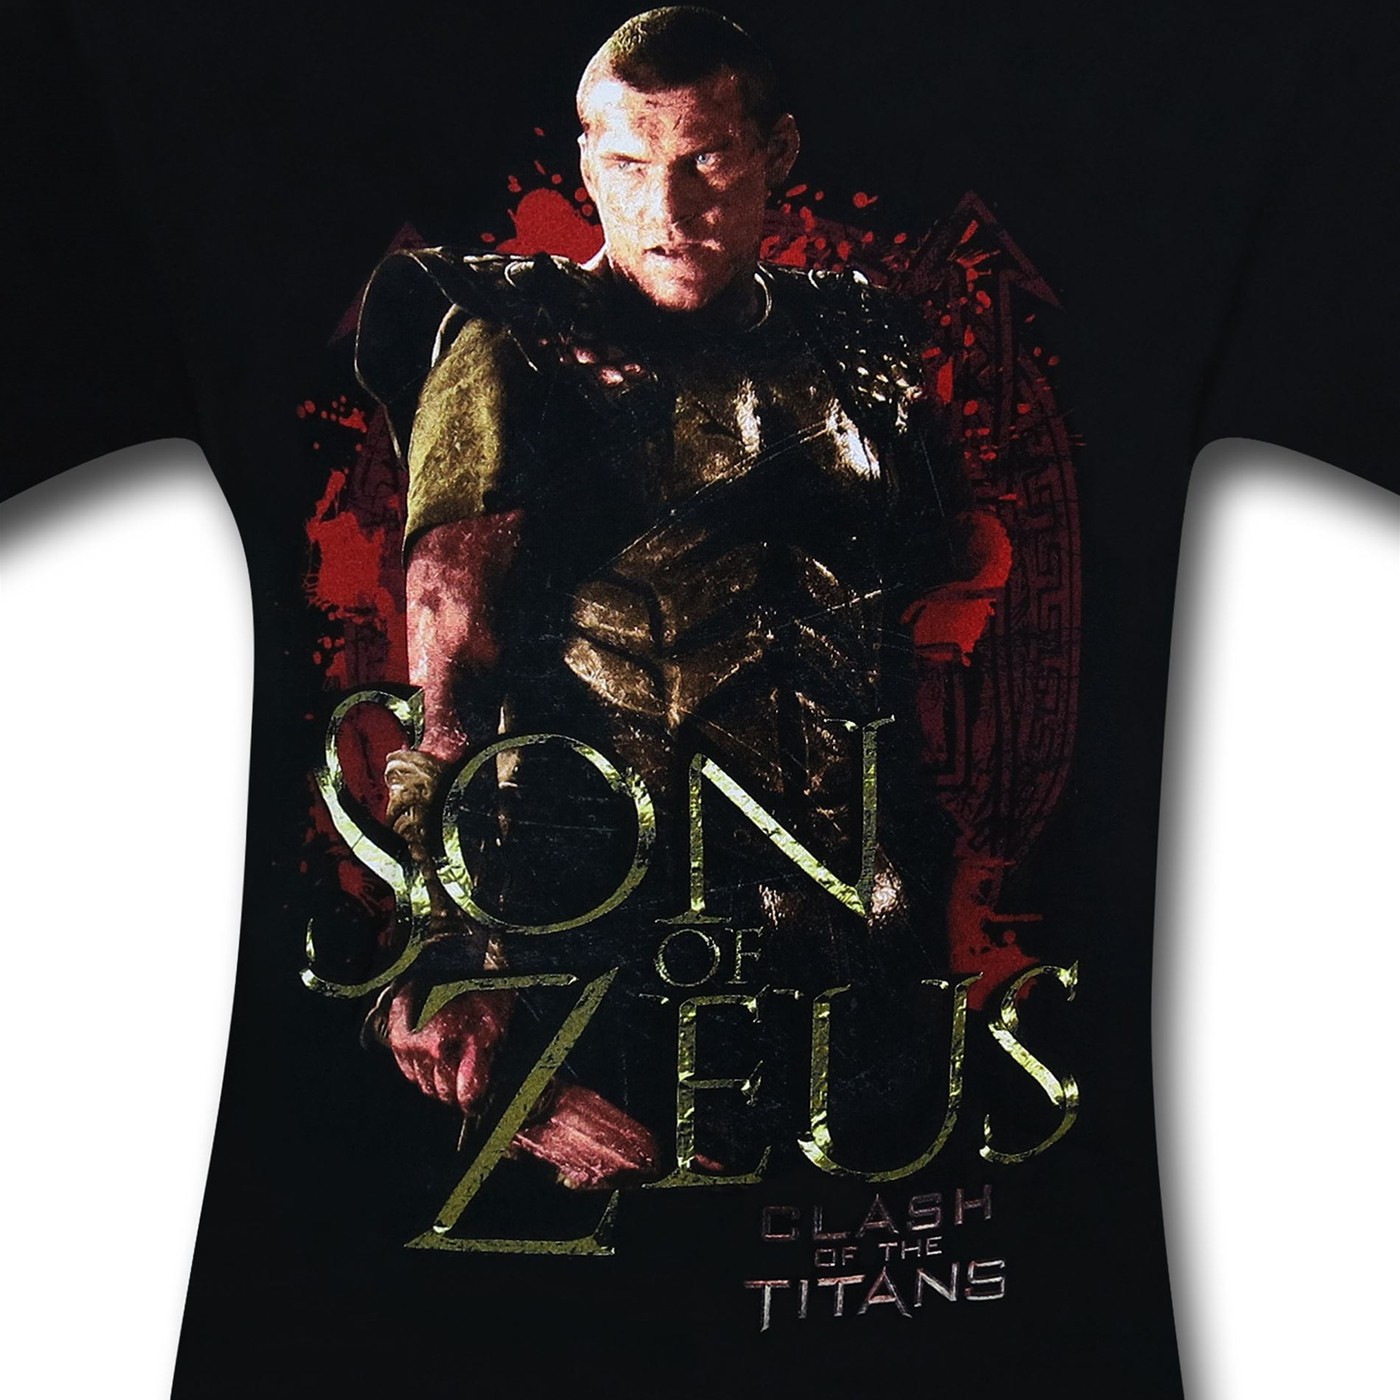 Clash of the Titans Son of Zeus T-Shirt